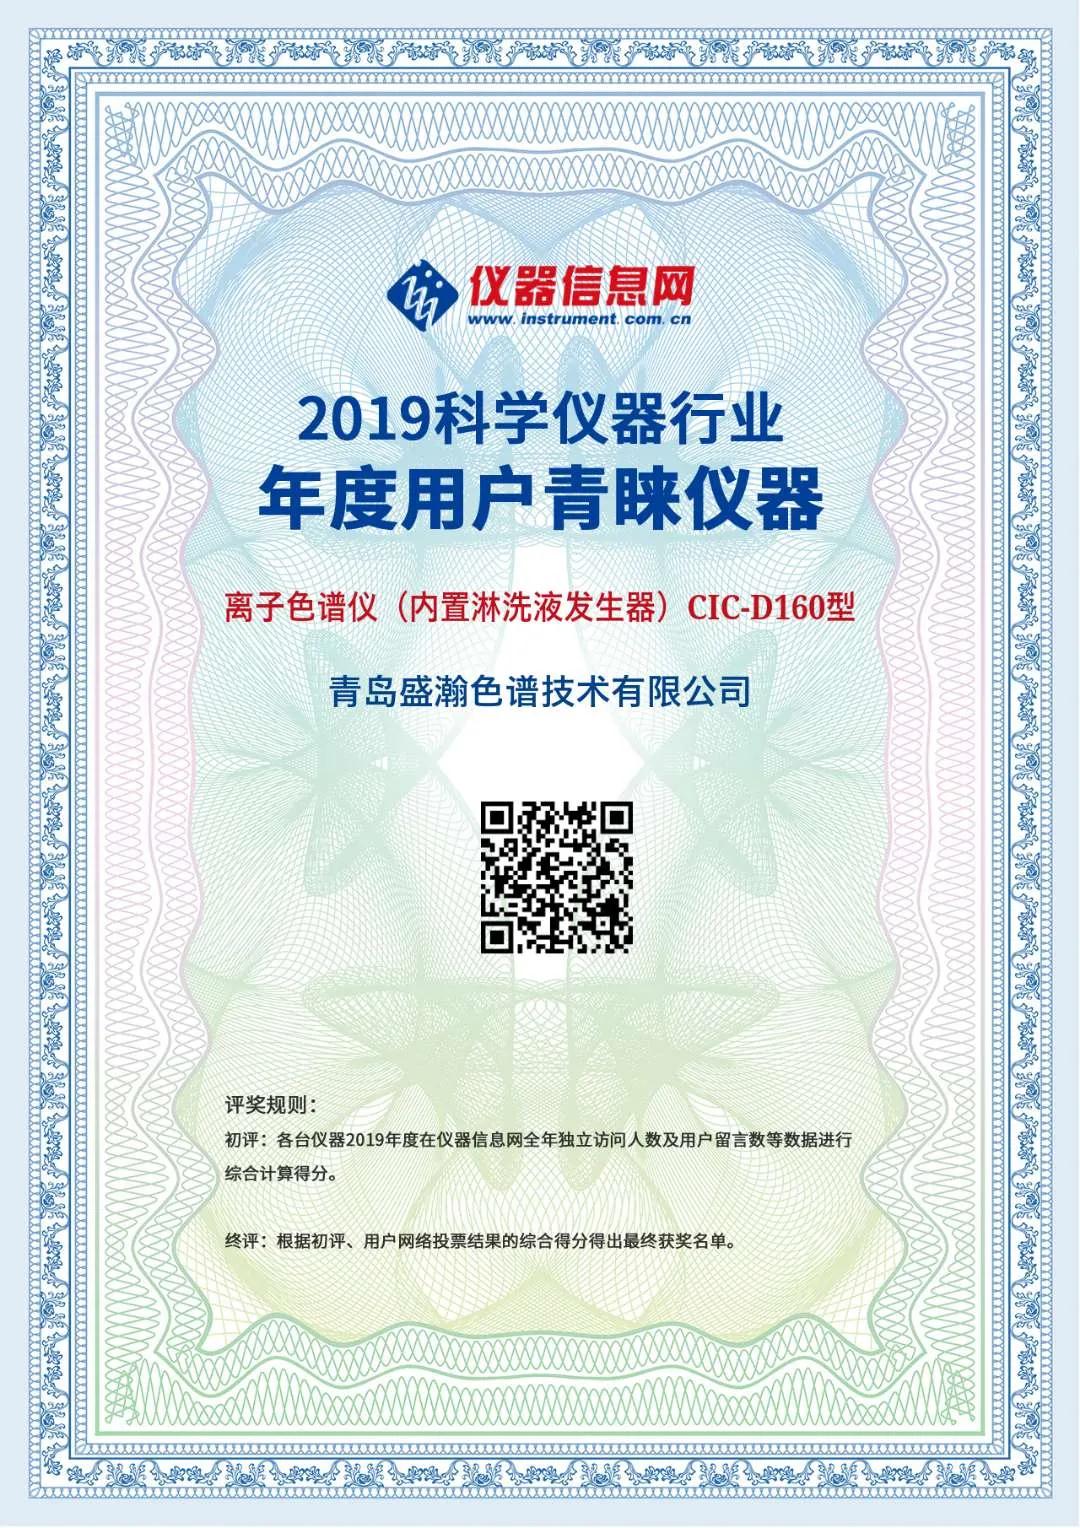 CIC-D160型离子色谱仪获奖